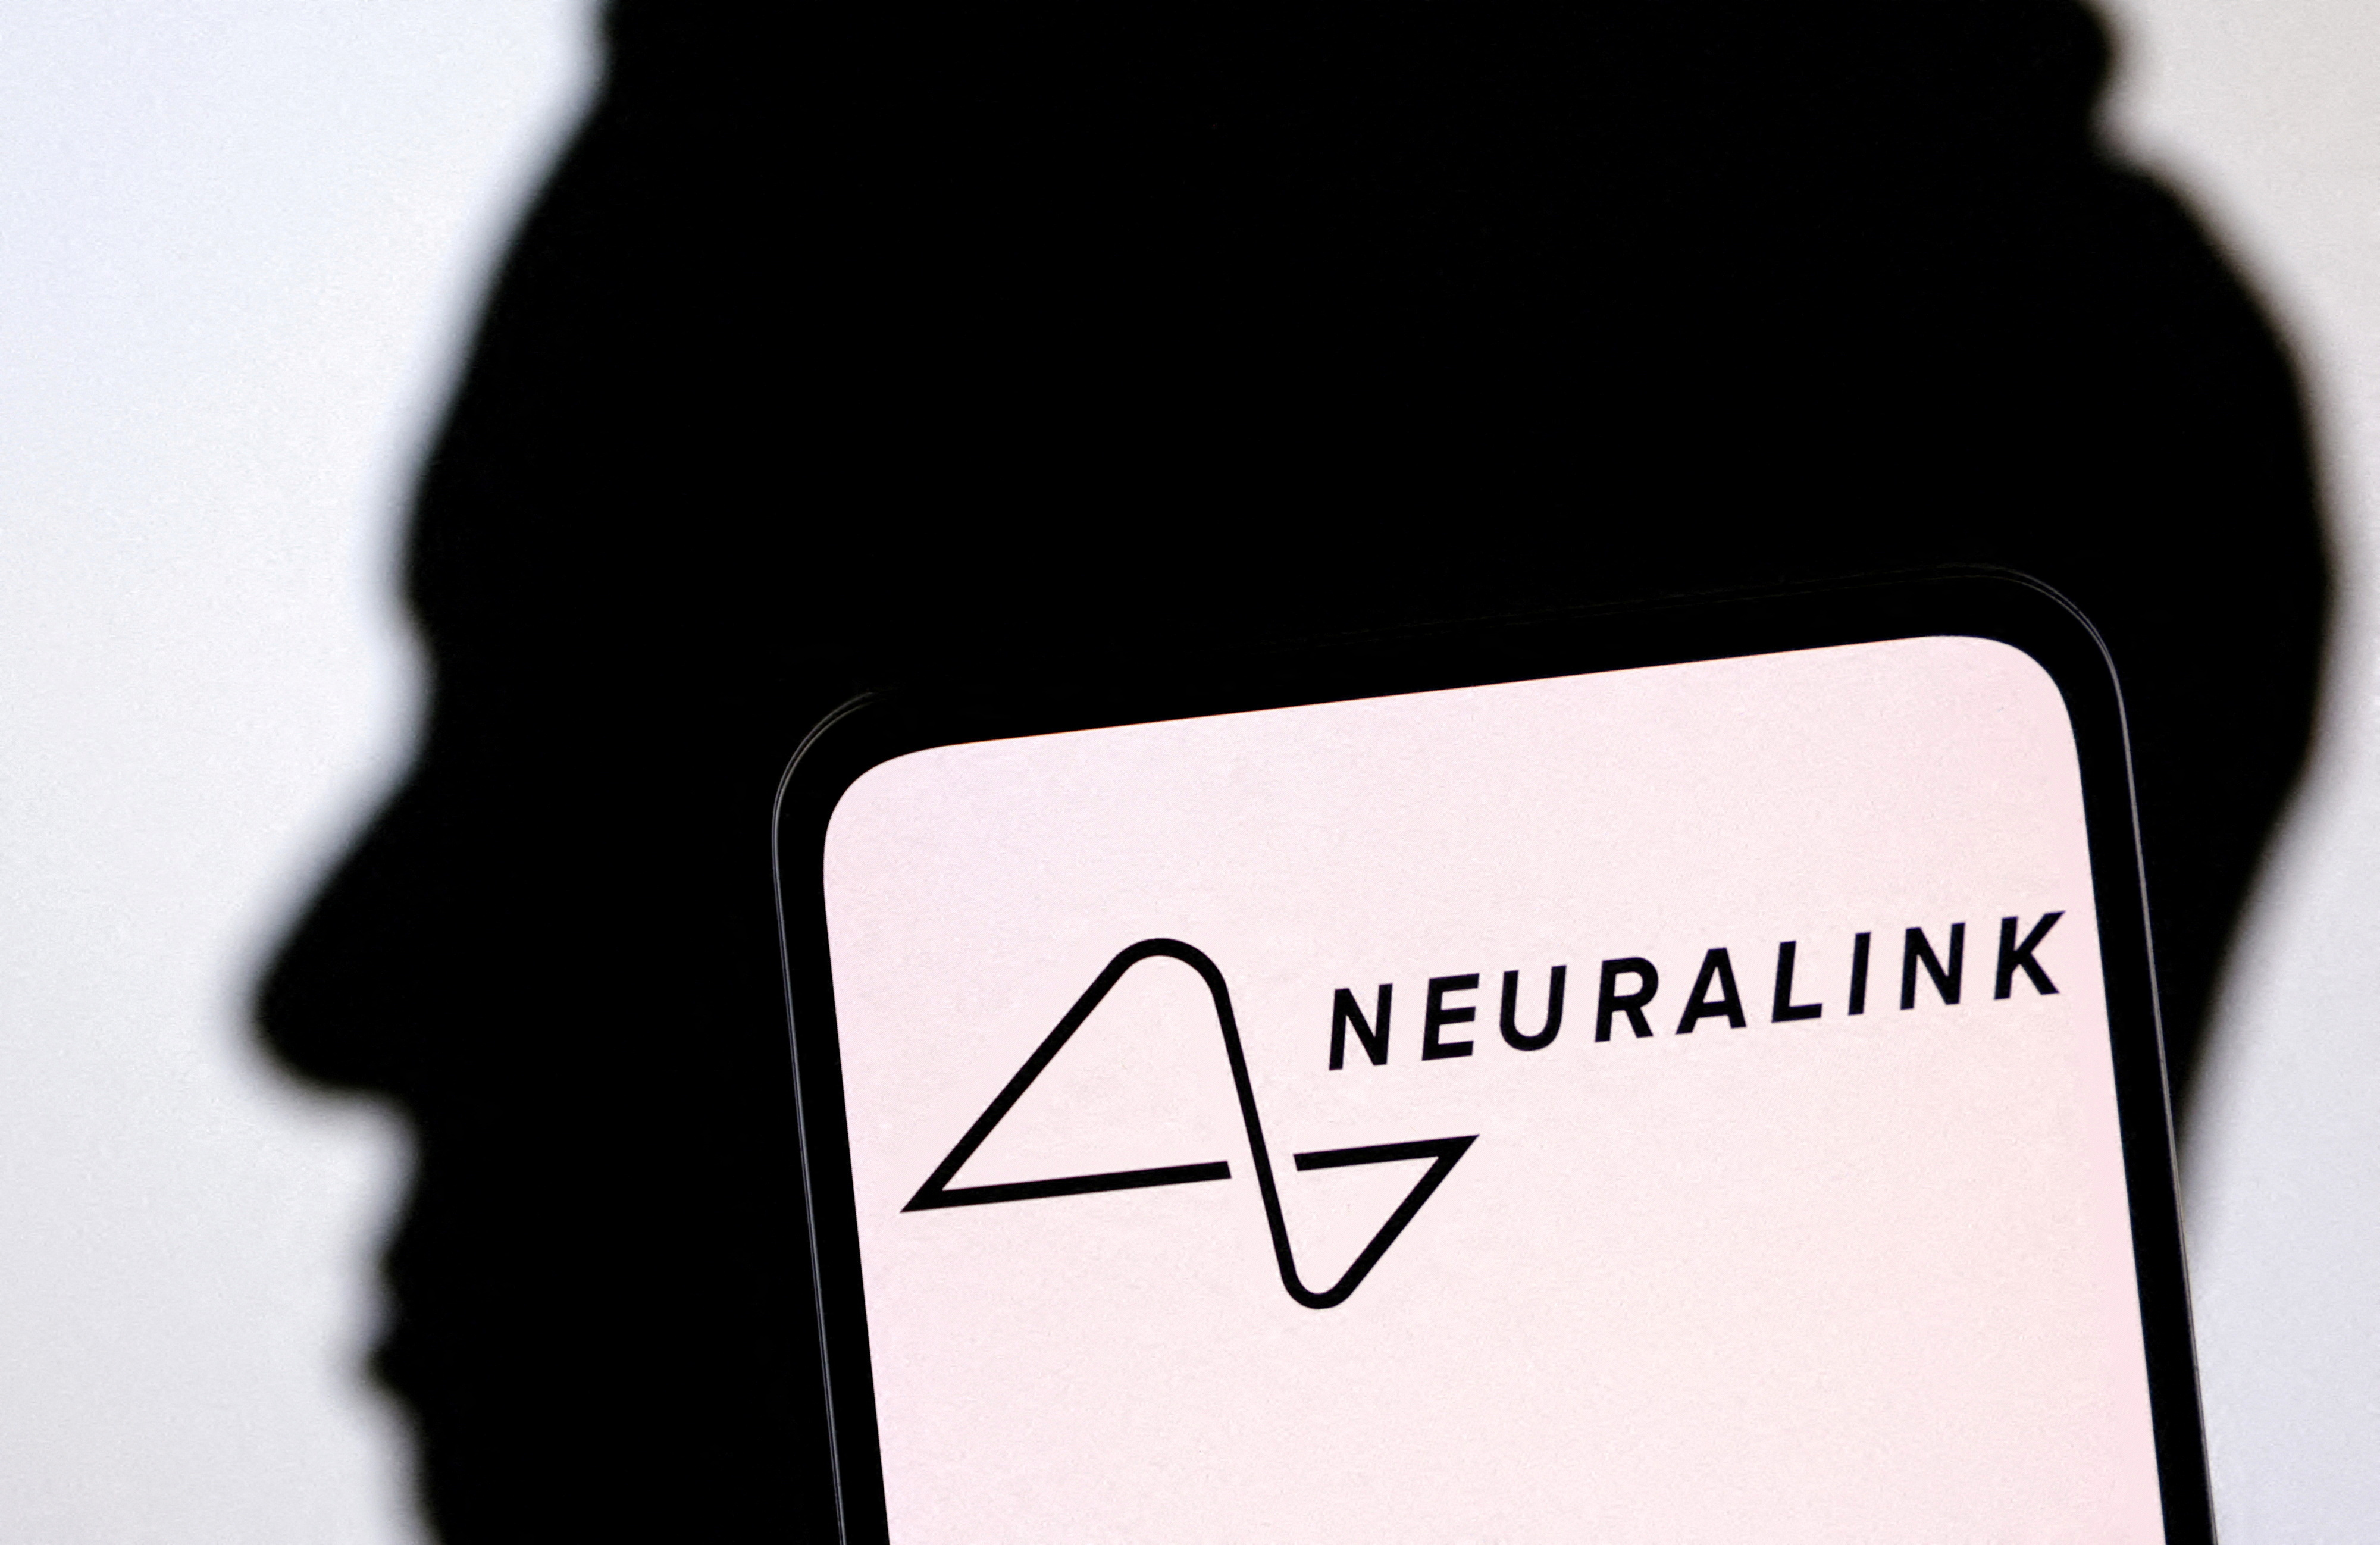 Illustration shows Neuralink logo and Elon Musk silhouette